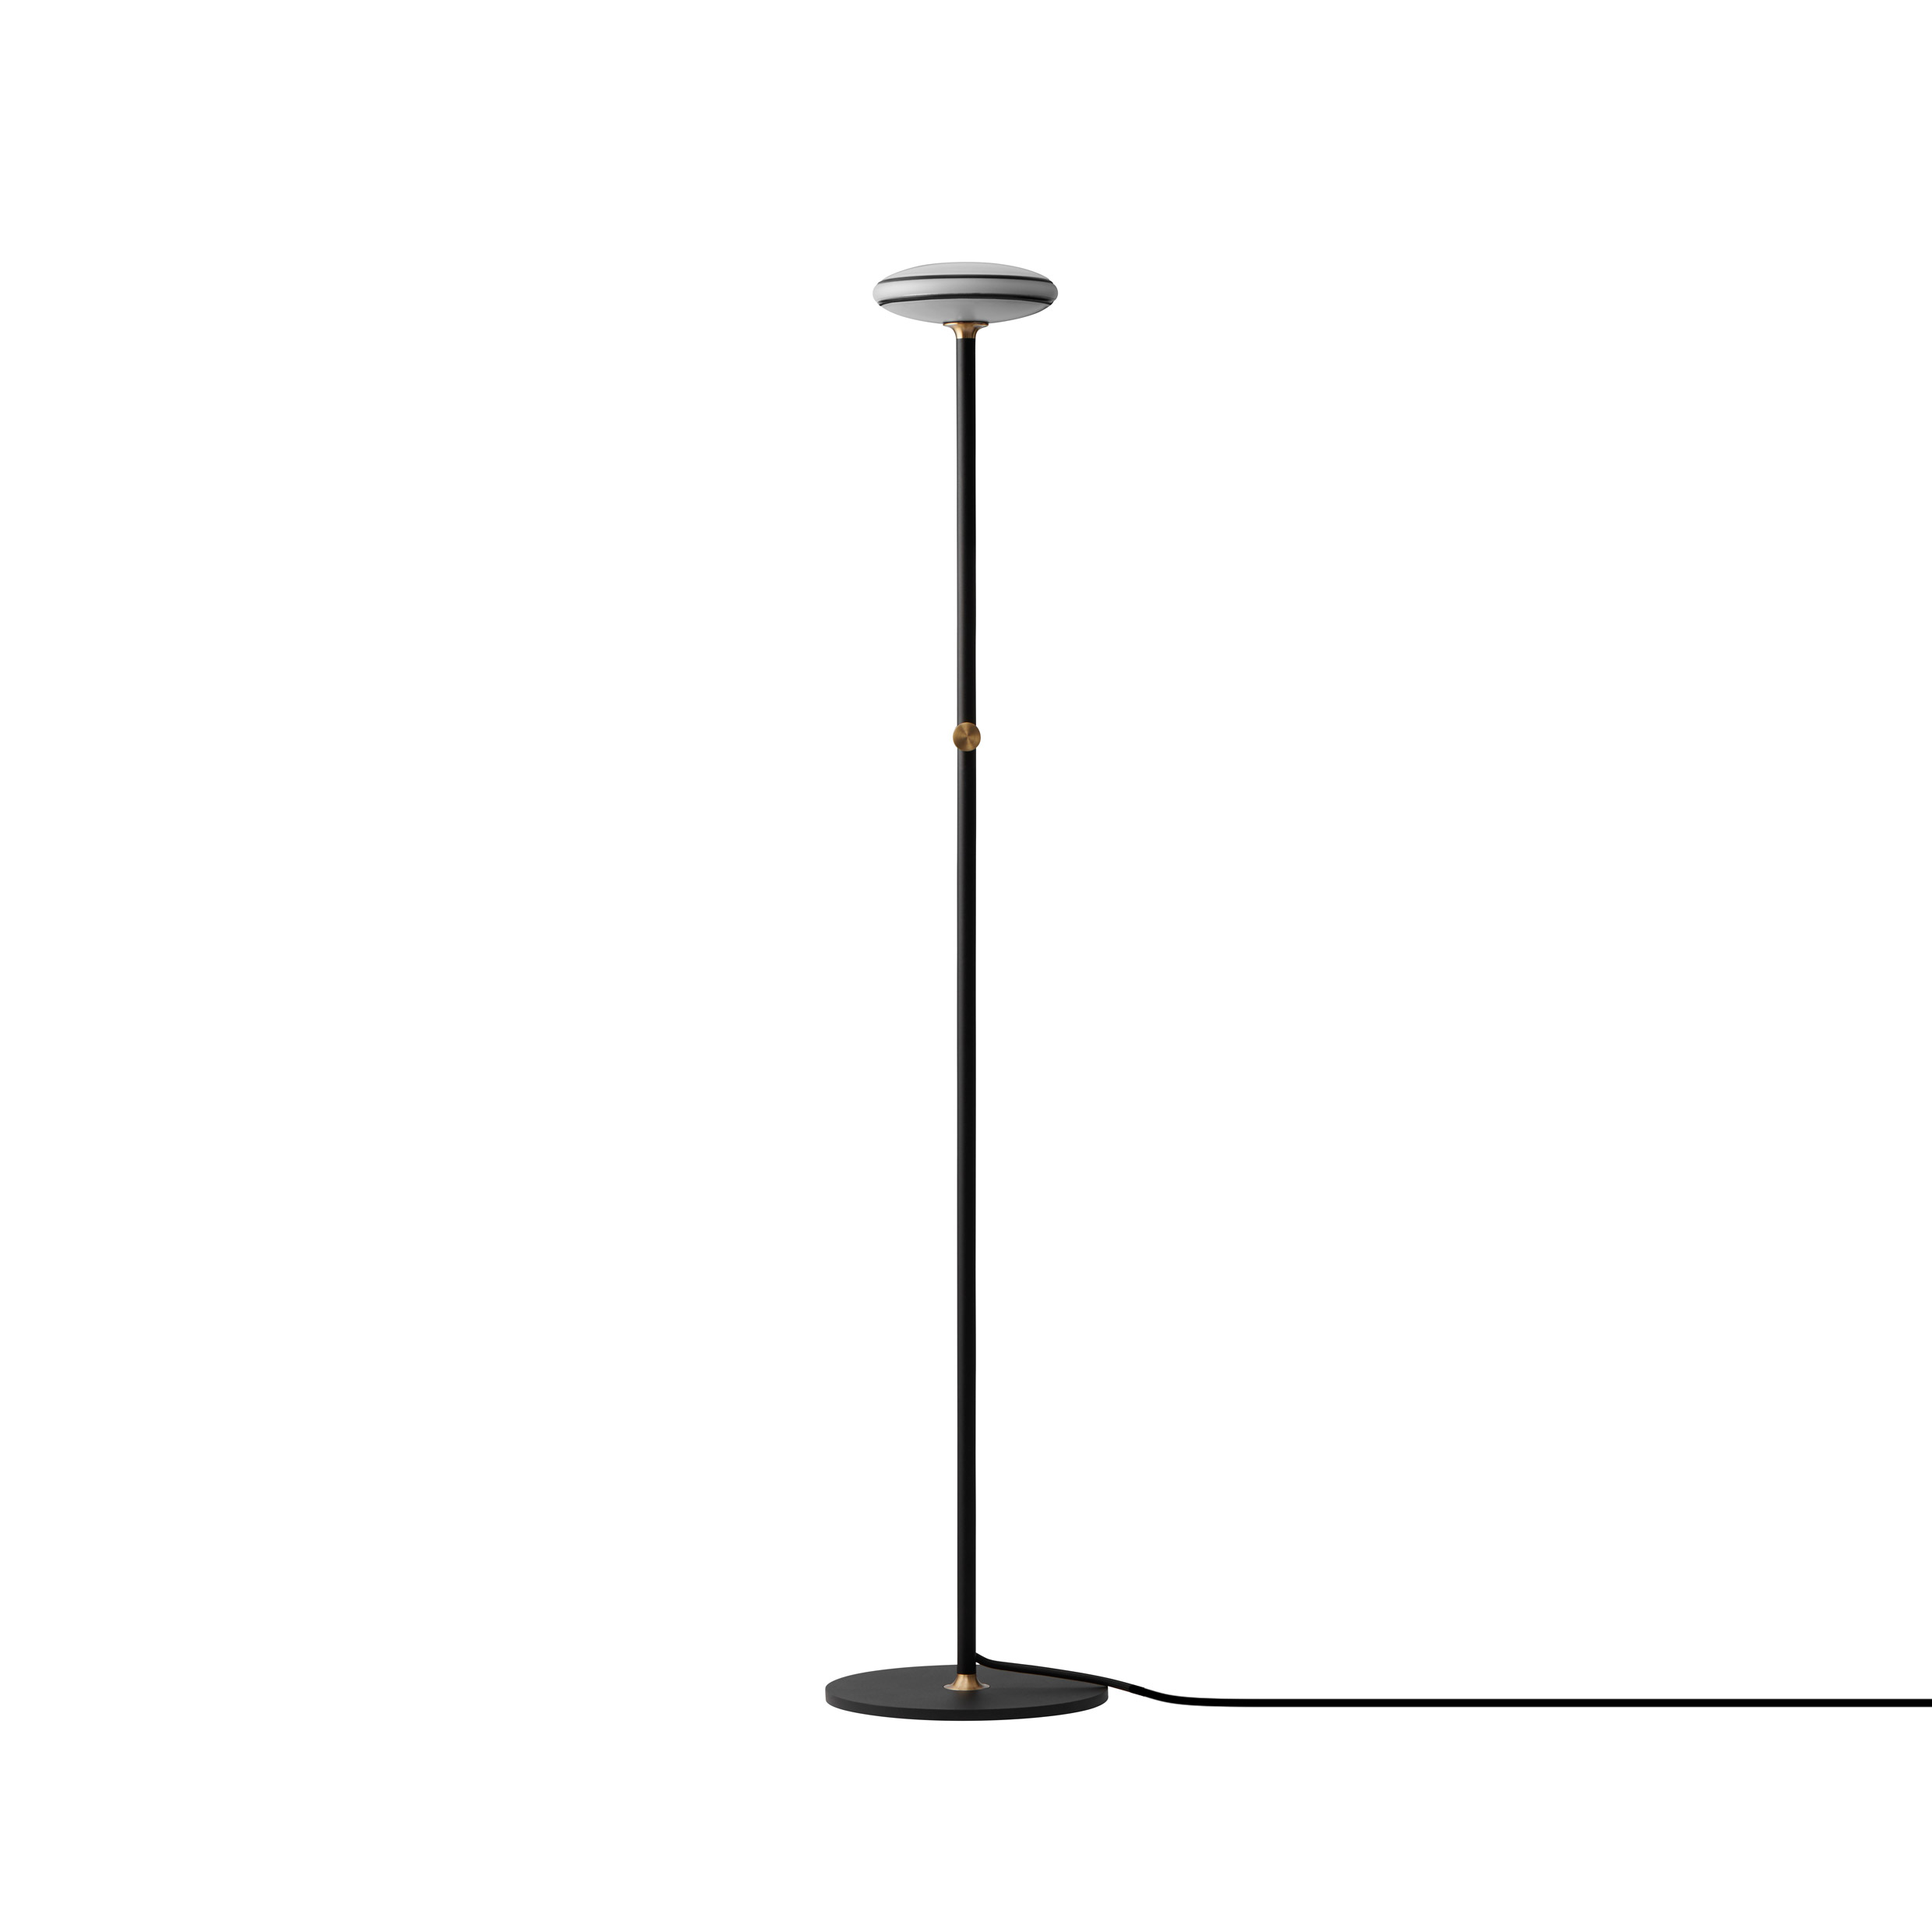 SHADE // ØS1 - FLOOR LAMP | SMART LED LIGHT - BLACK - WITH REMOTE CONTROL